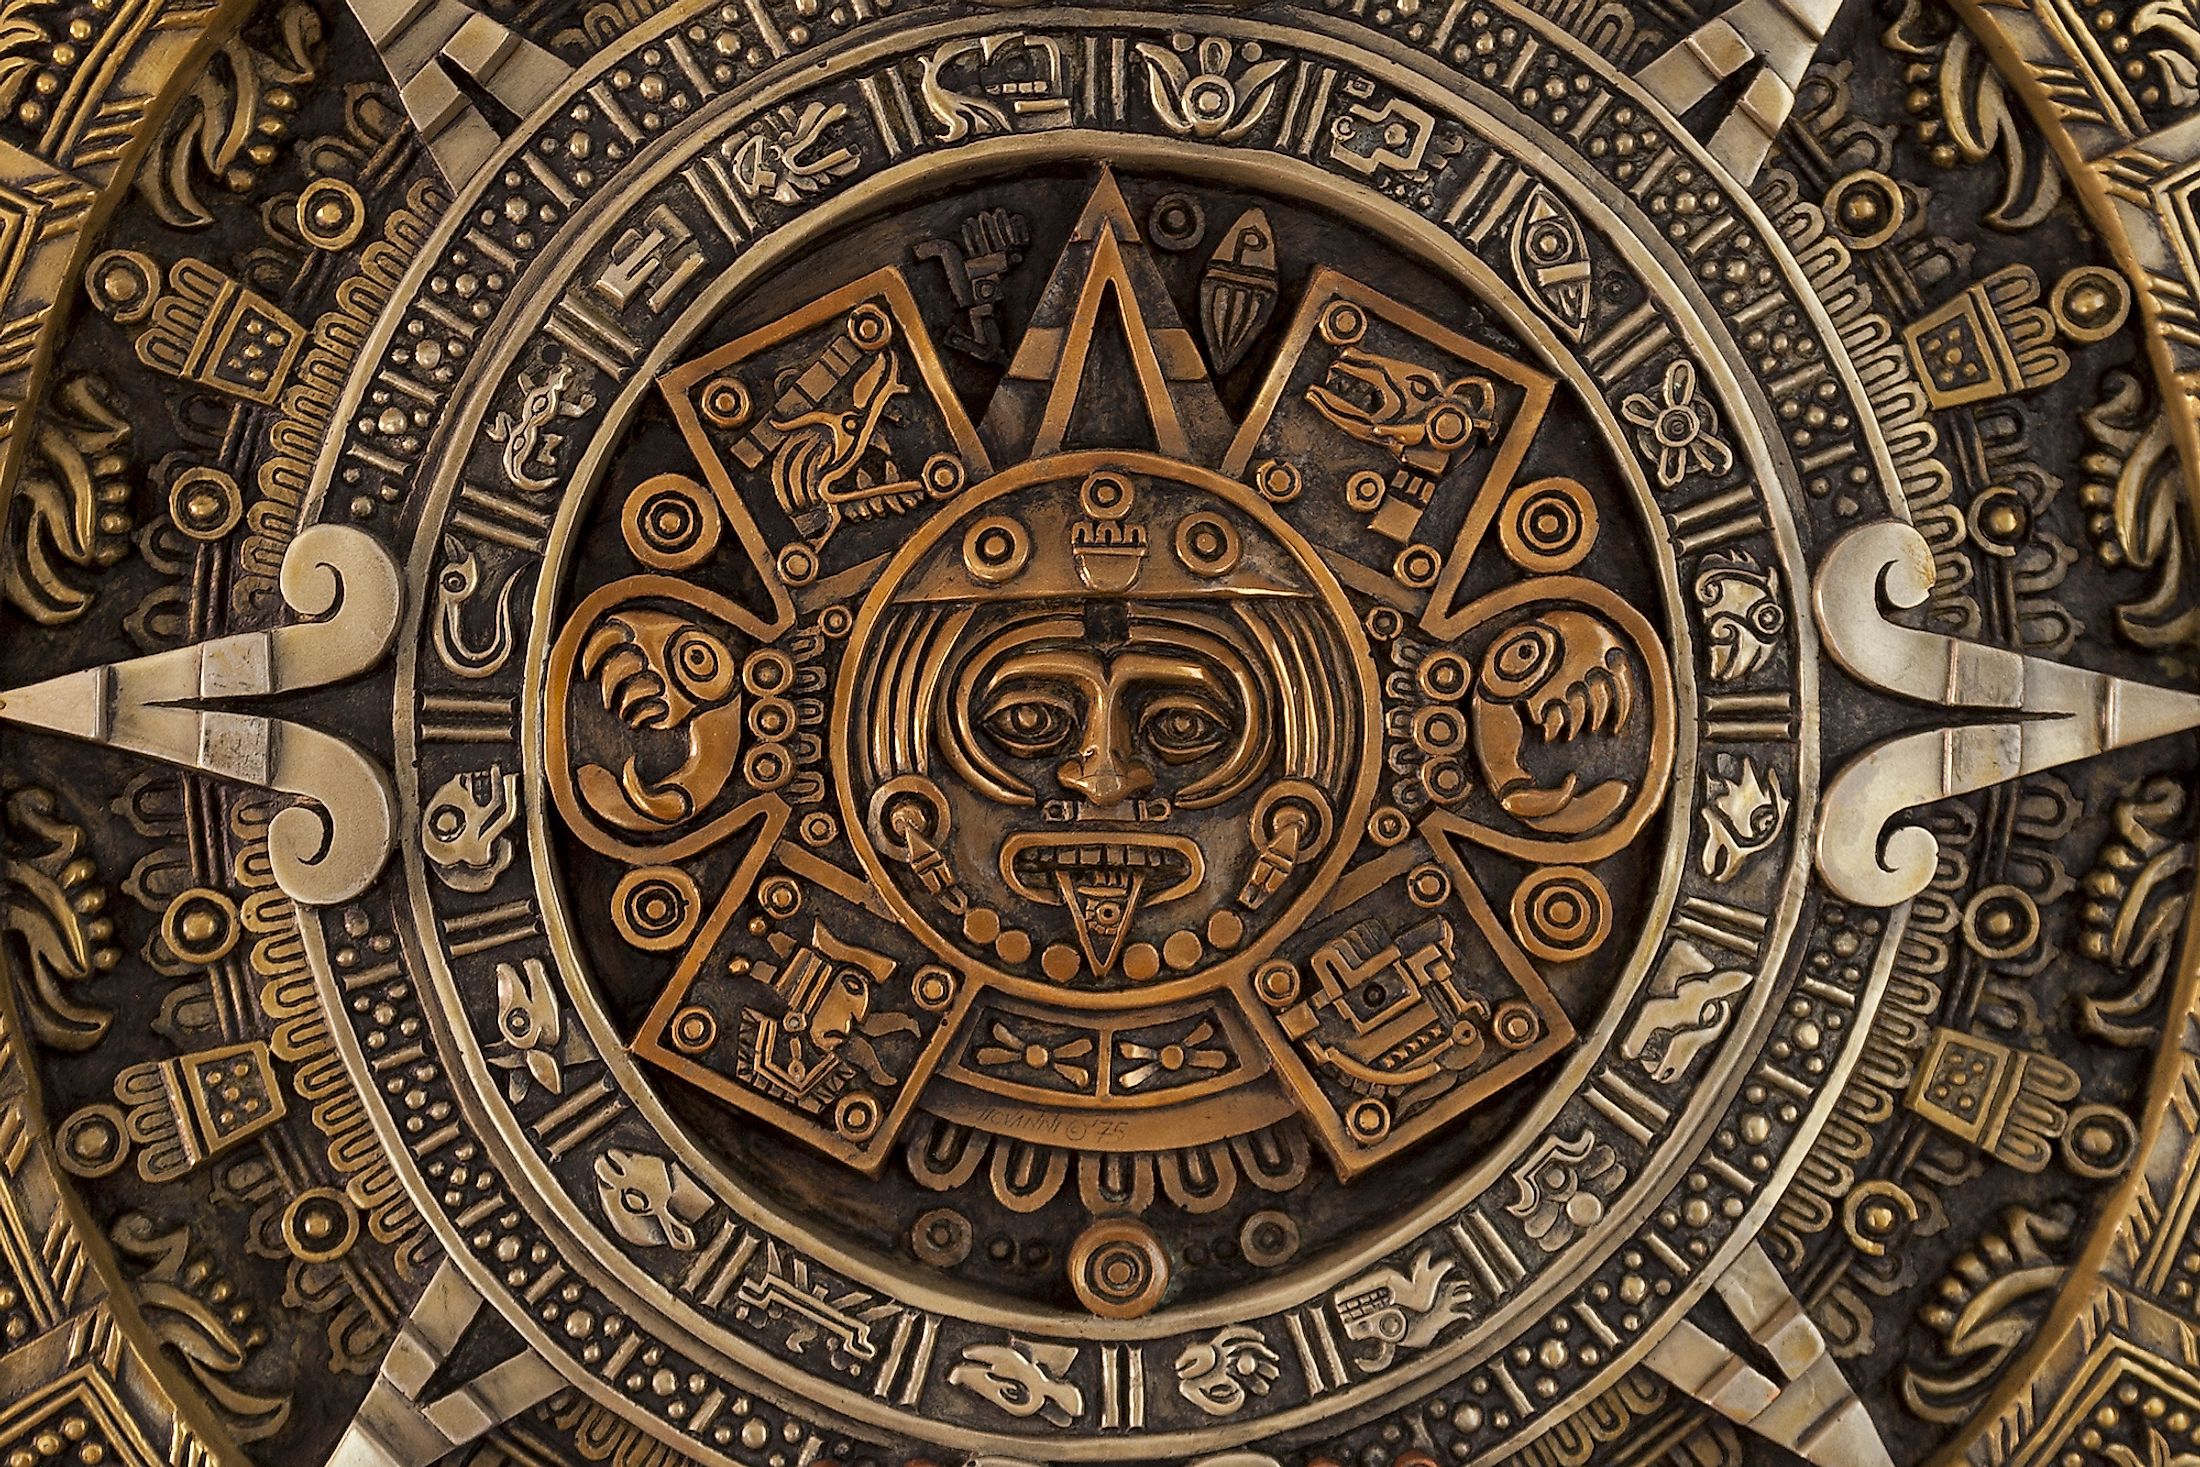 Close view of the ancient Aztec calendar.